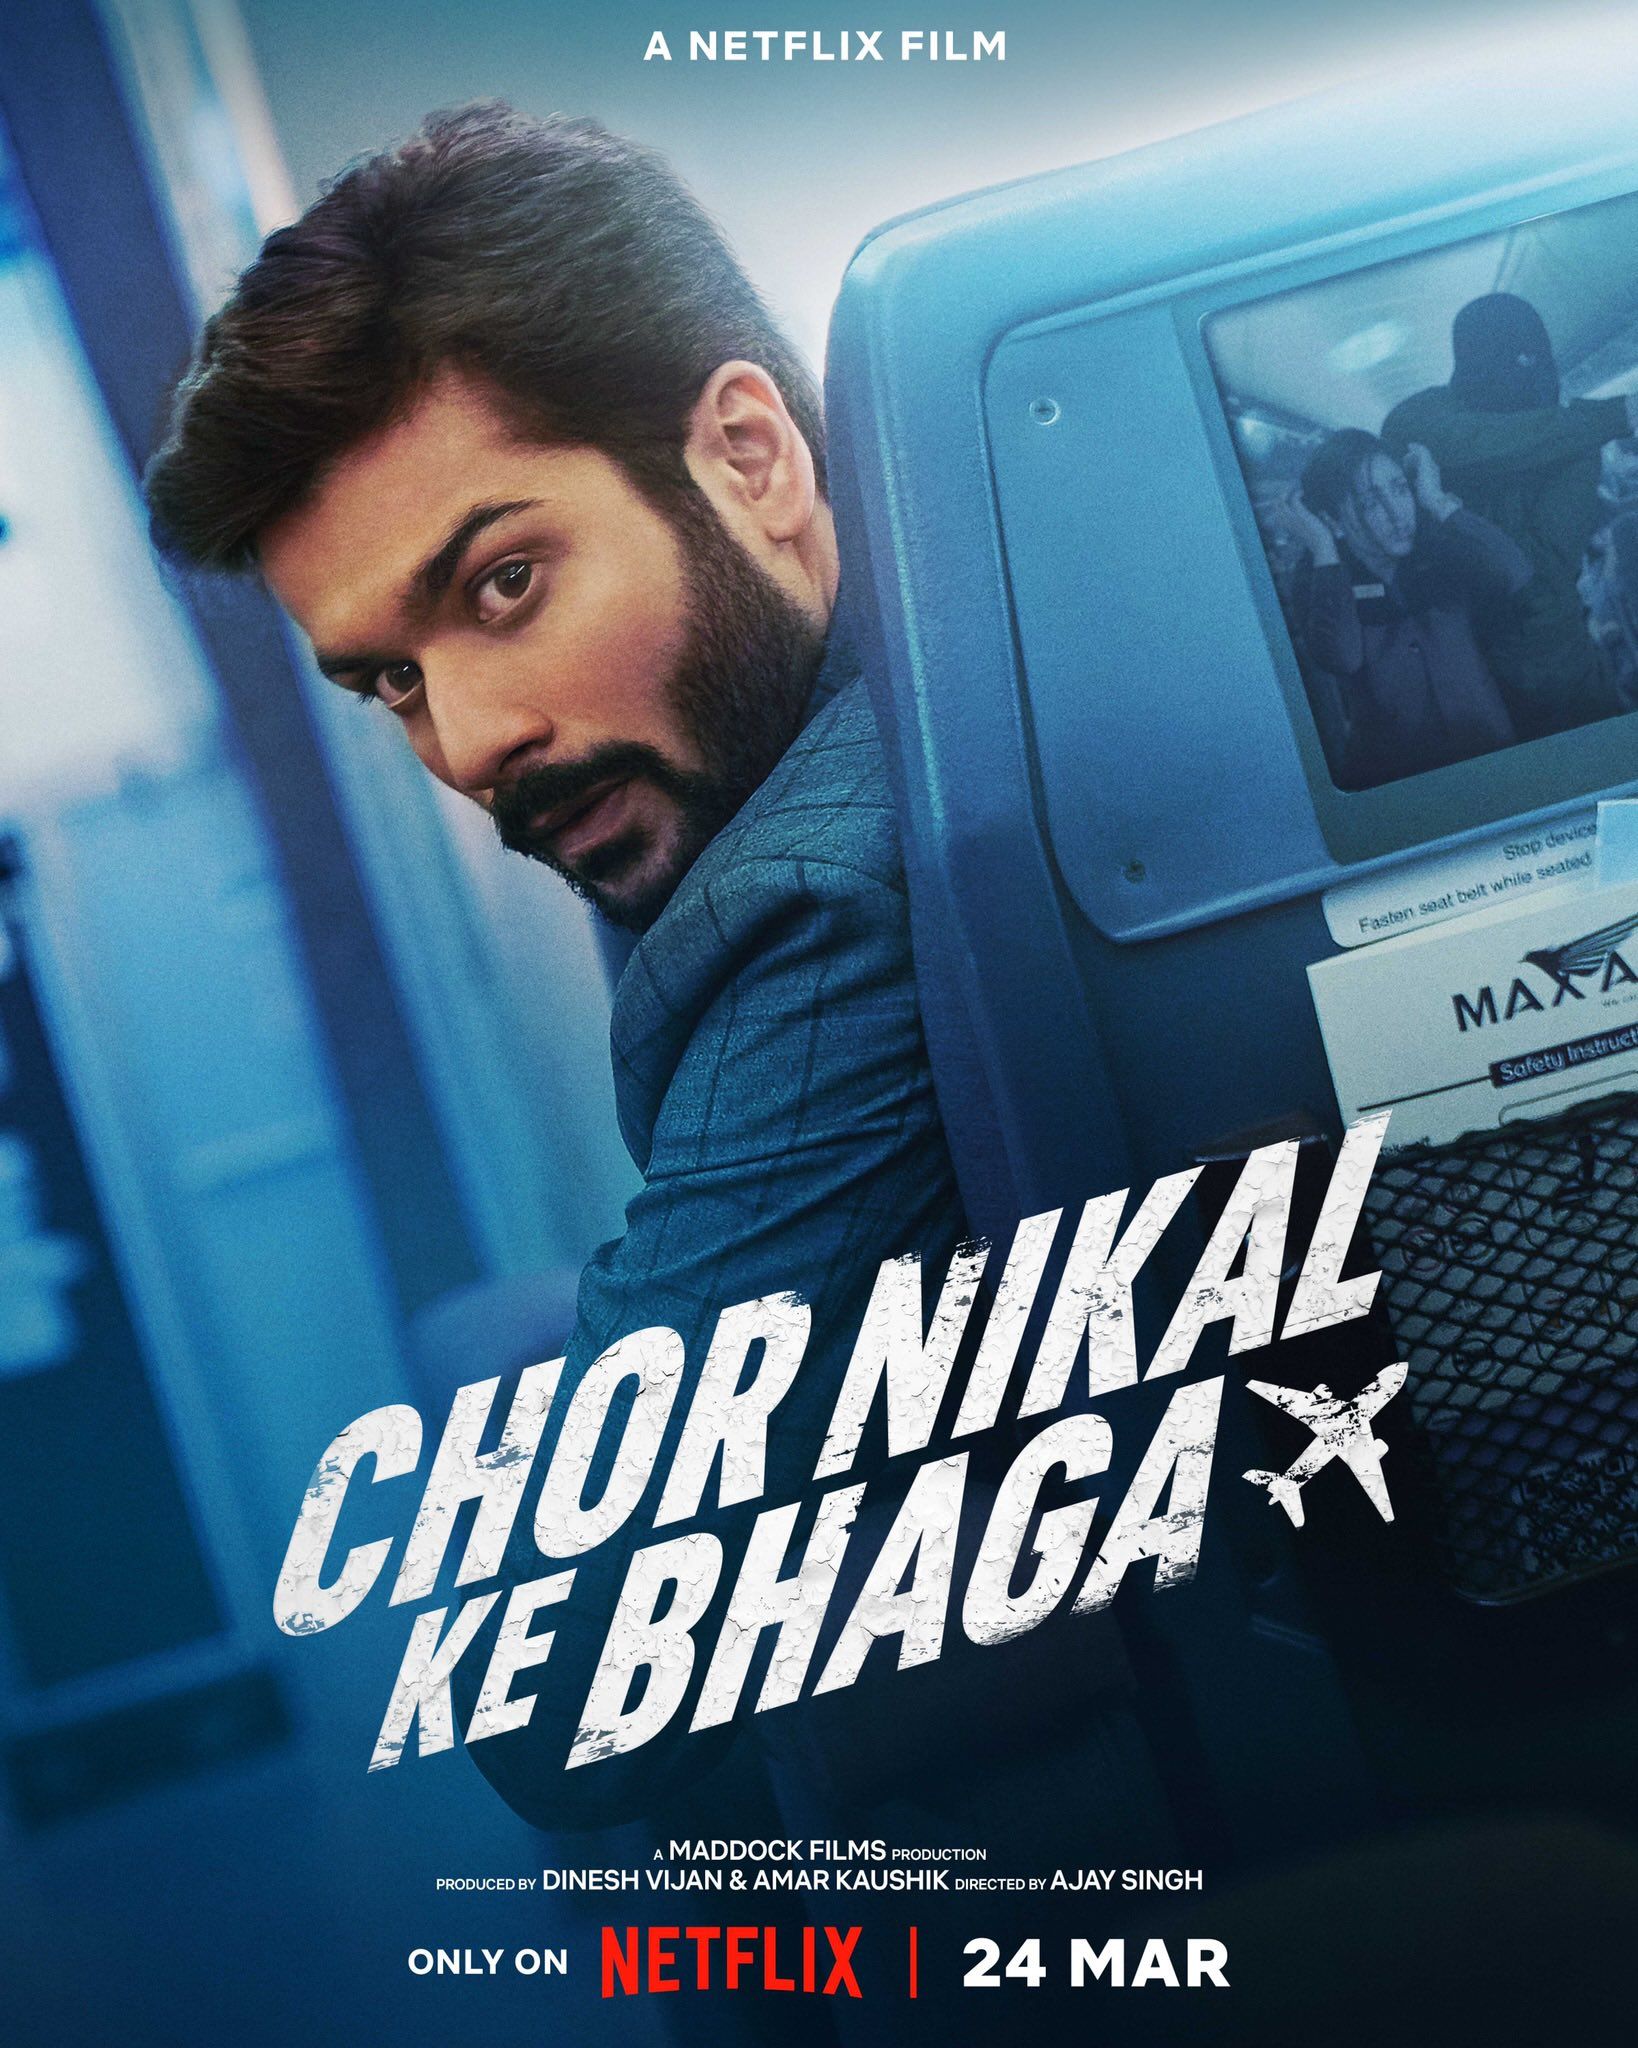 Download Chor Nikal Ke Bhaga Movie HD Official Poster 1